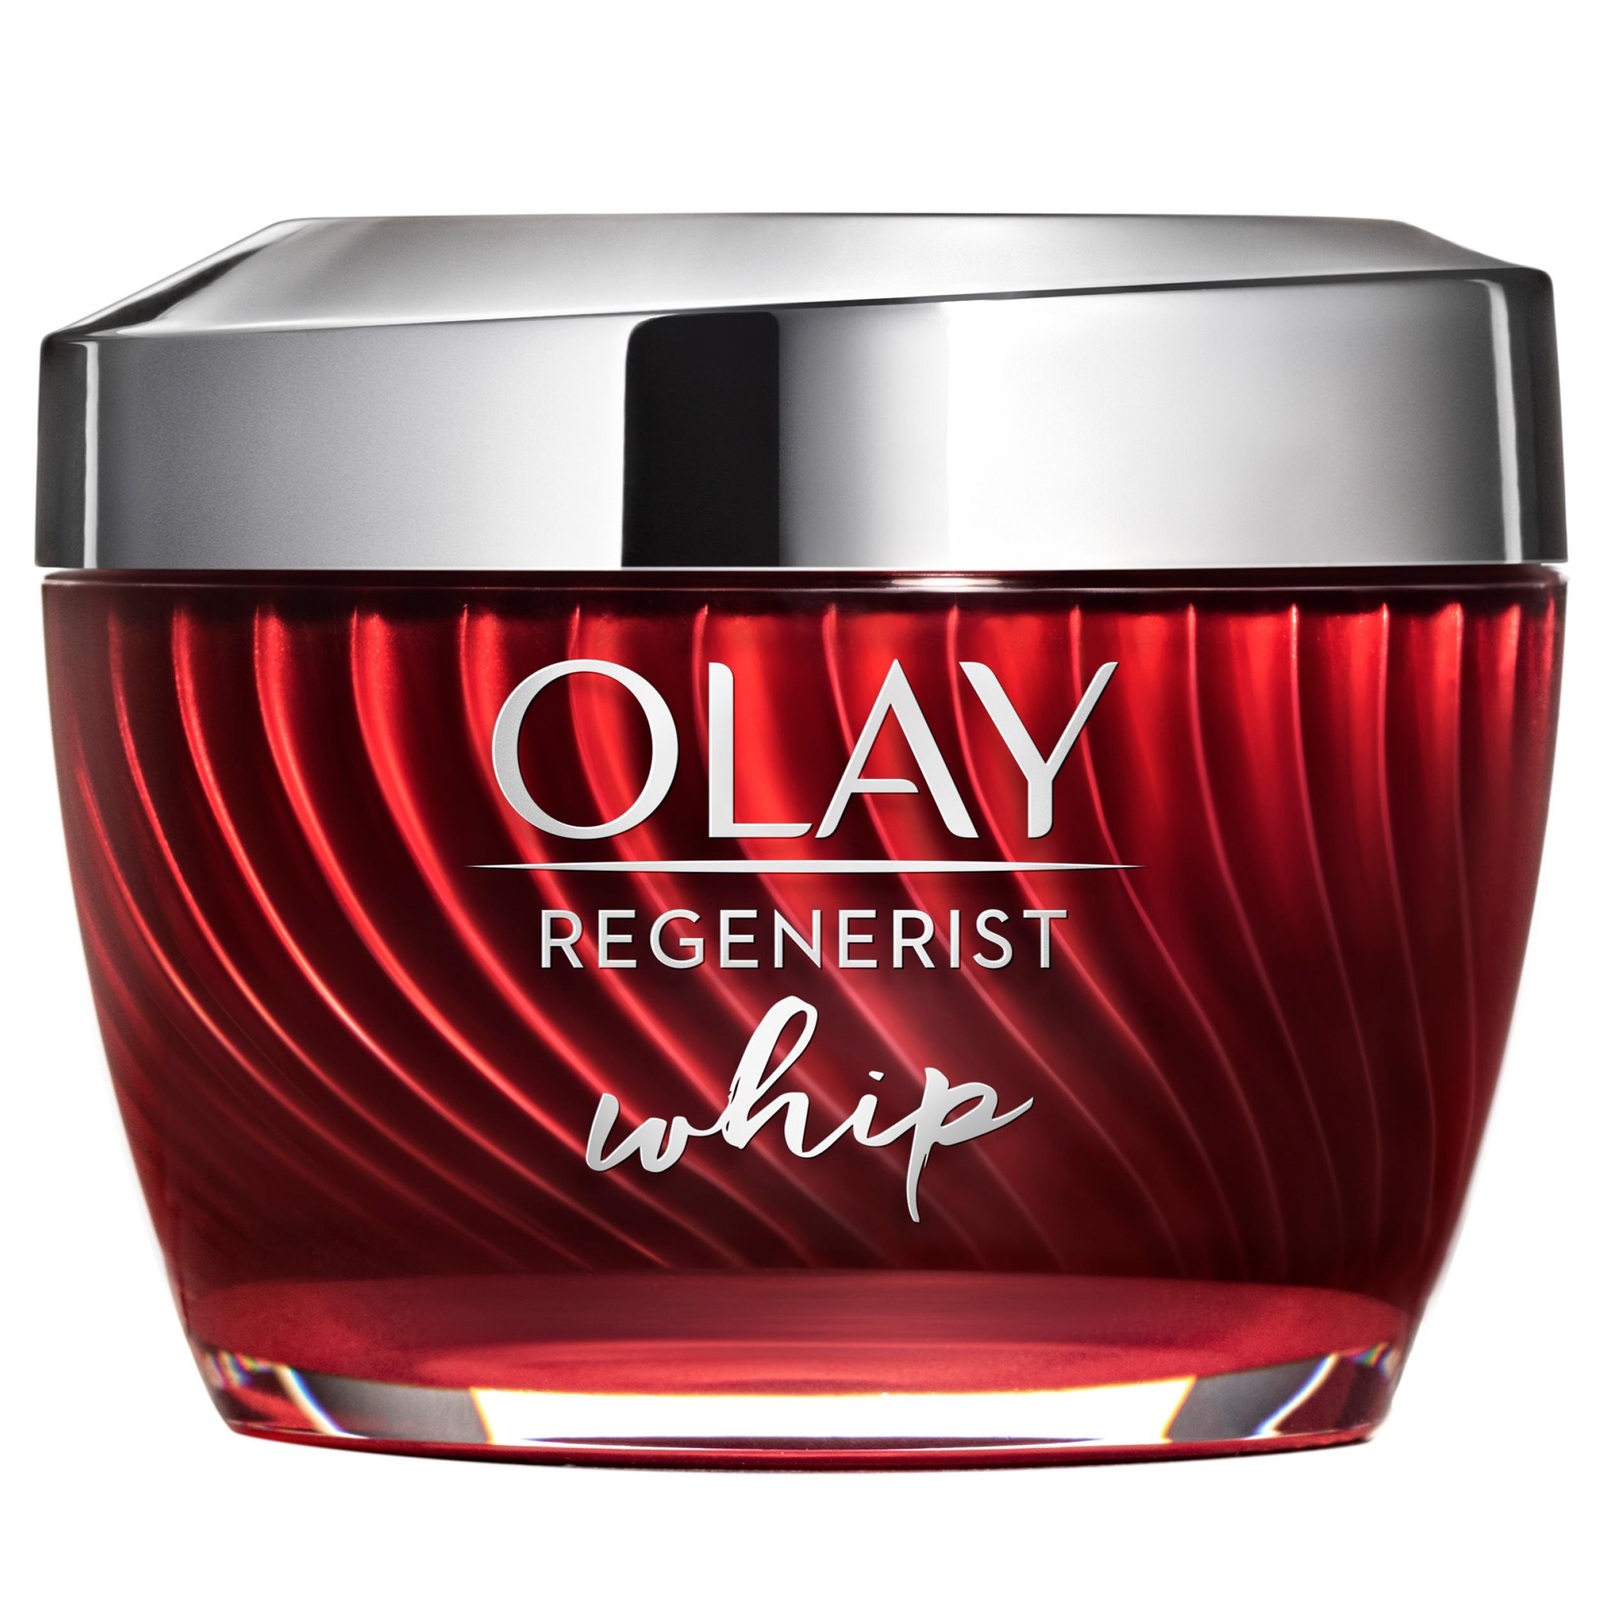 Olay Regenerist Whip Face Moisturizer SPF 25 Fragrance Free Branded Cream 1.7 oz